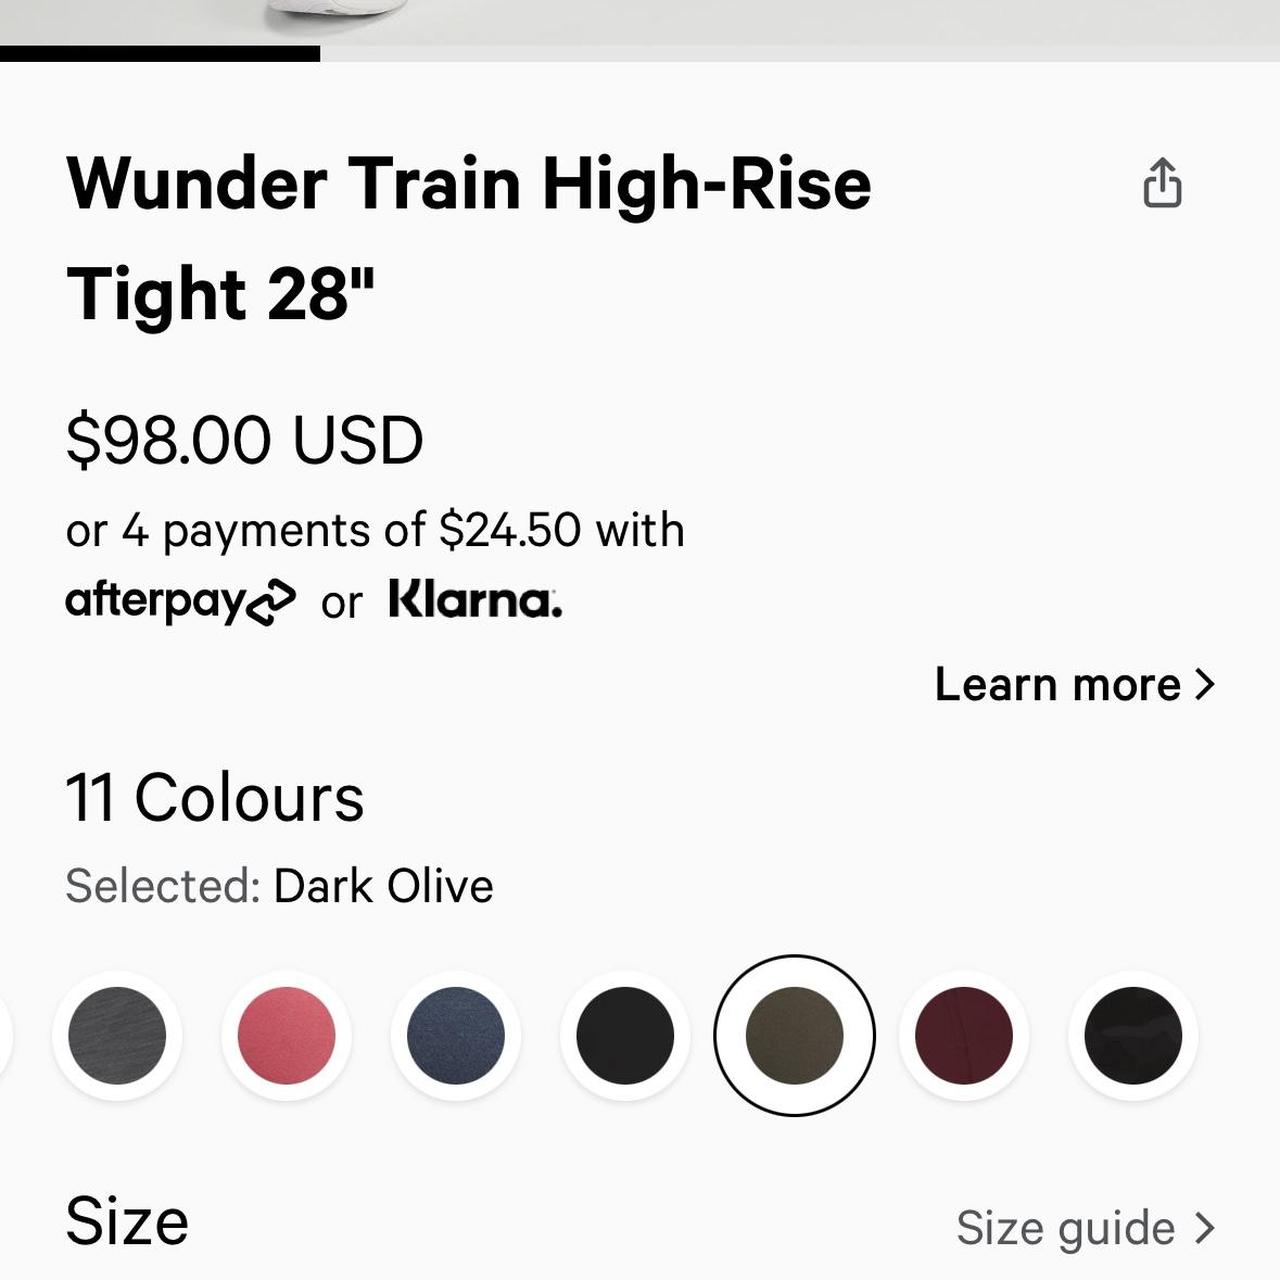 Lululemon Wunder Train High-Rise, Tight 28 in dark